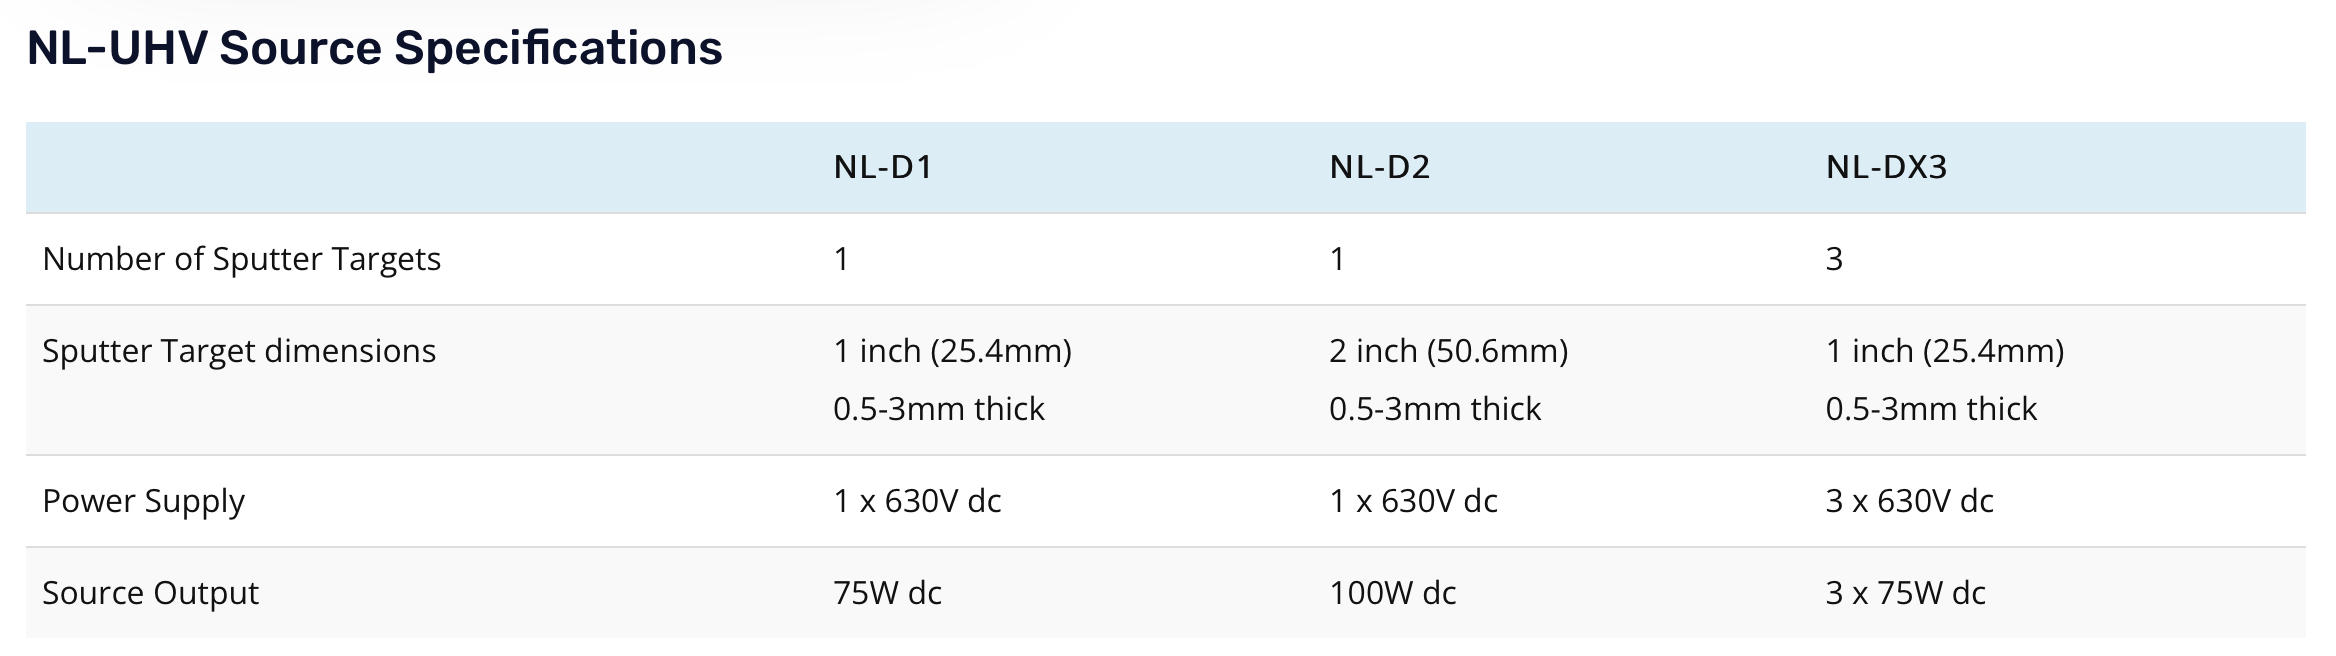 nl-uhv product specifications src canada | nikalyte ltd